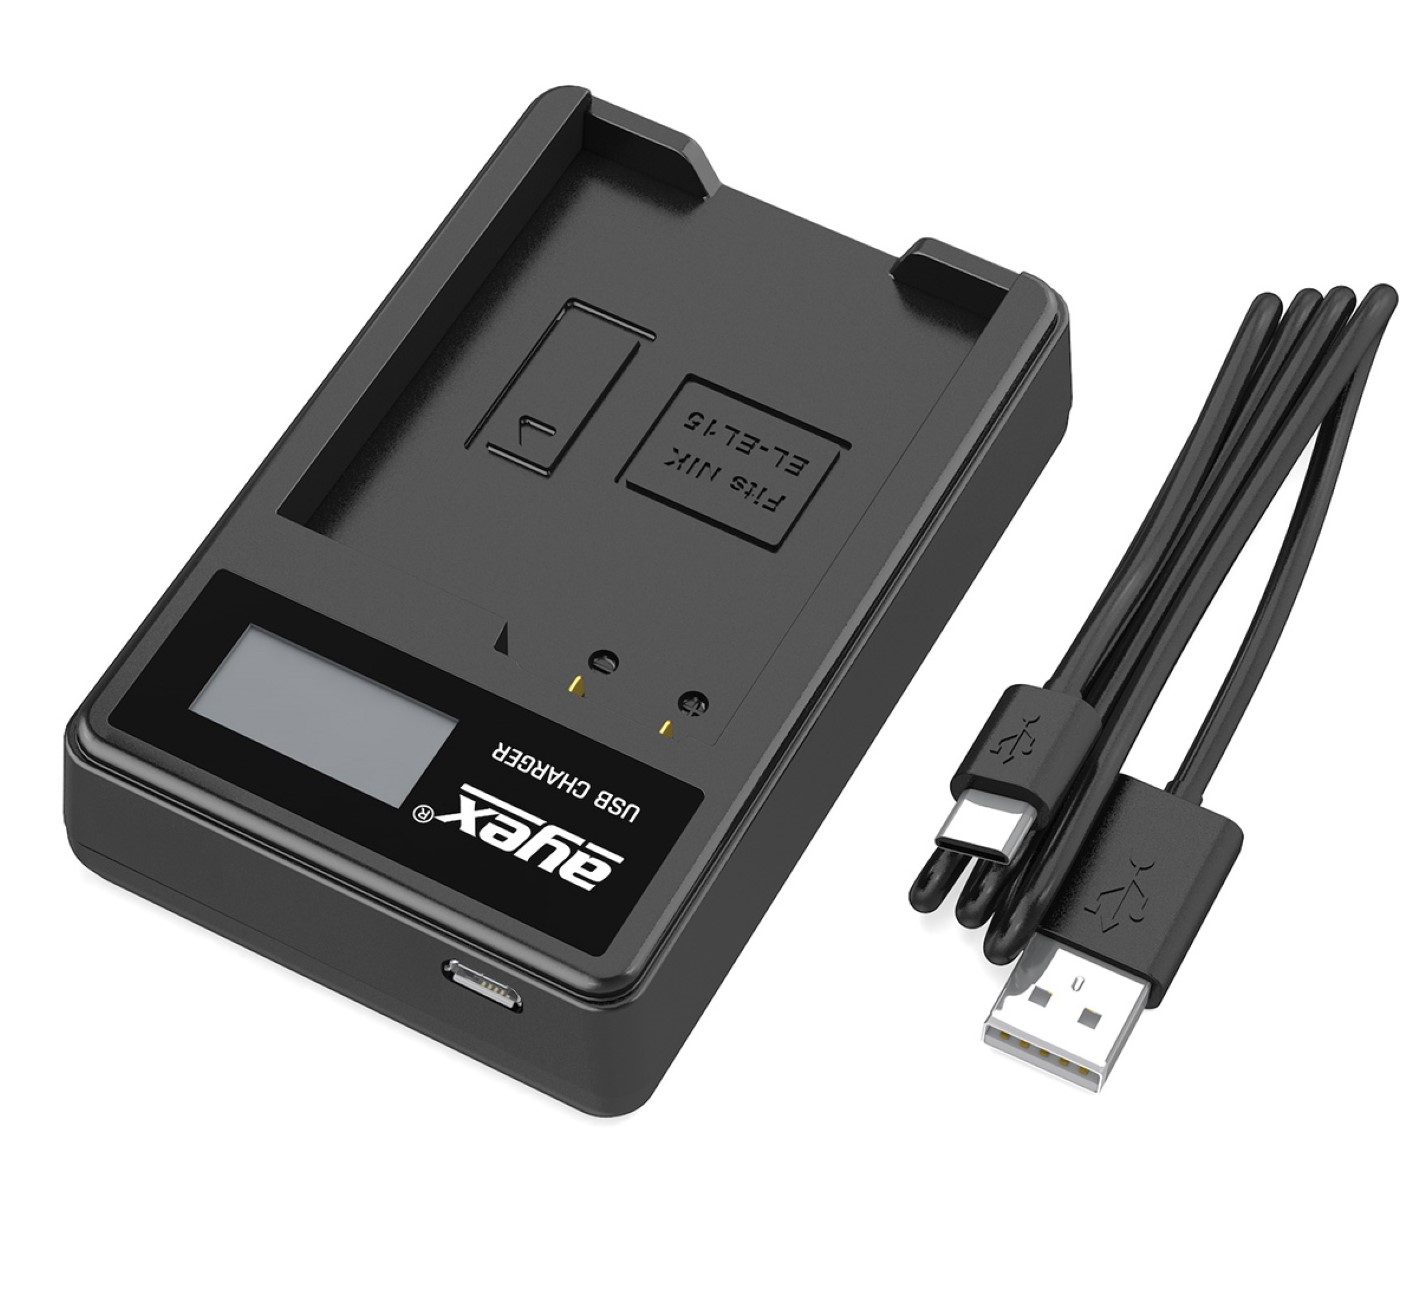 ayex USB Ladegerät für Nikon EN-EL15 Akku